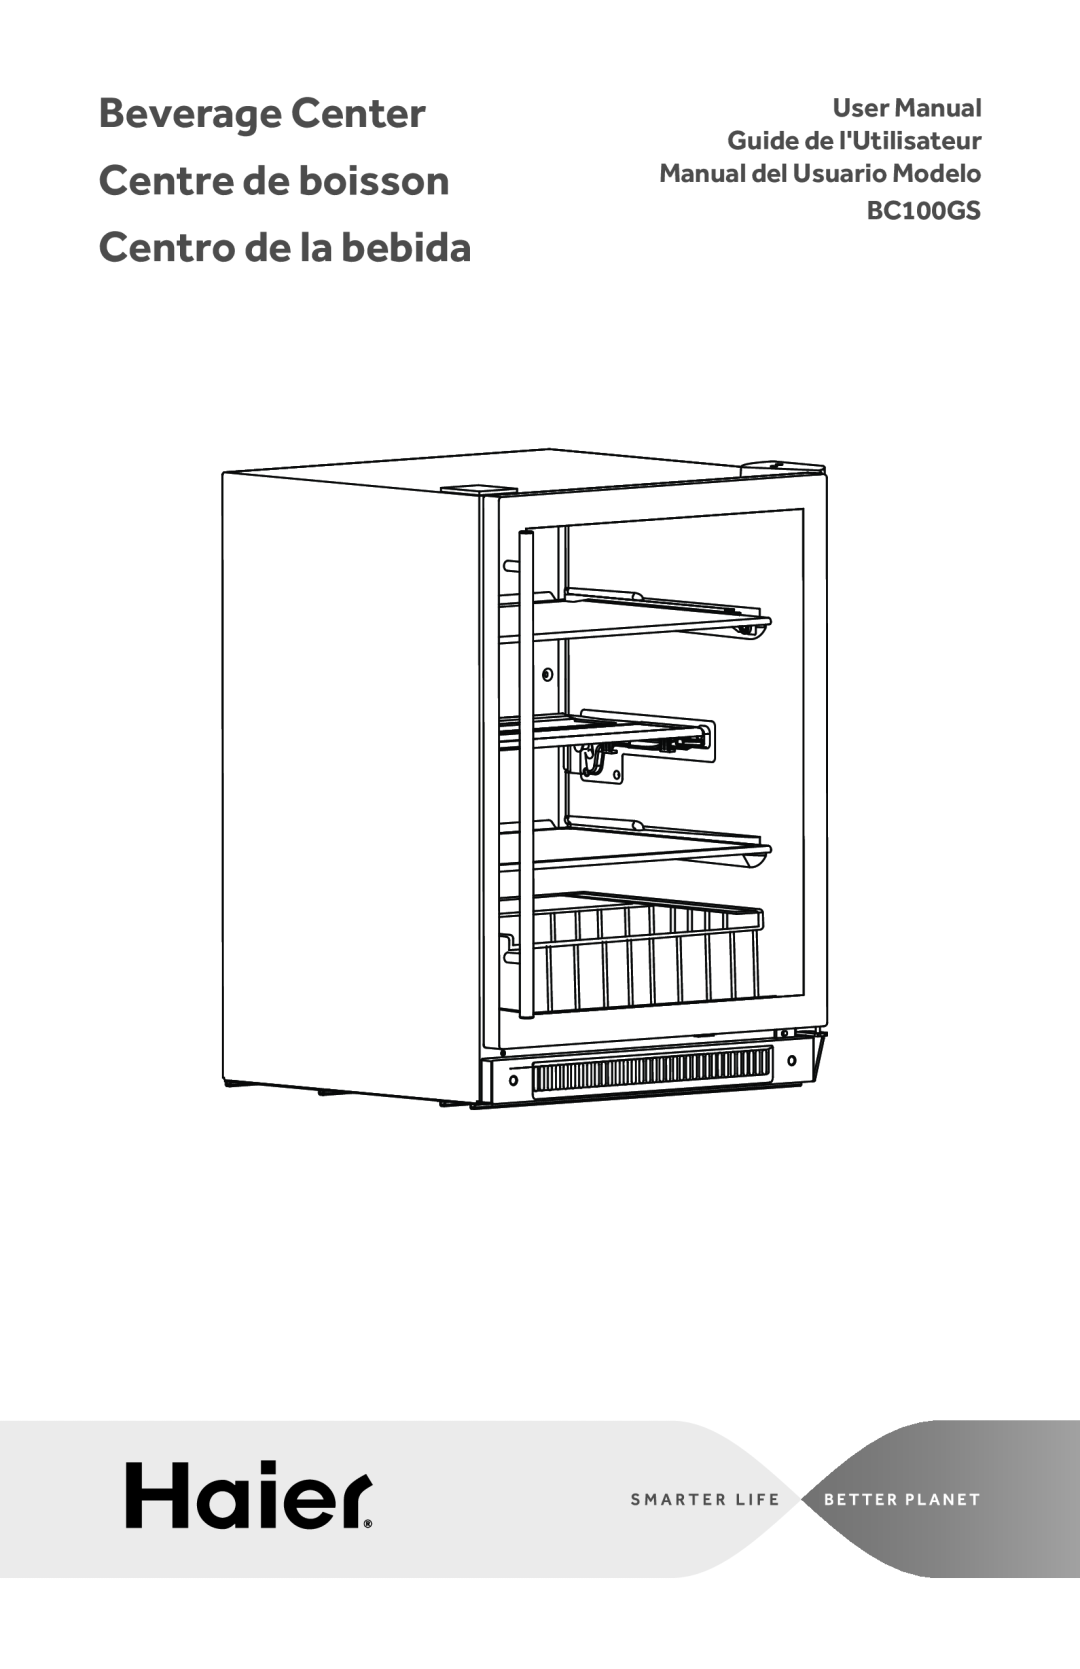 Haier BC100GS user manual Beverage Center Réfrigérateur / Congélateur Refrigerado / Congelador, User Manual 